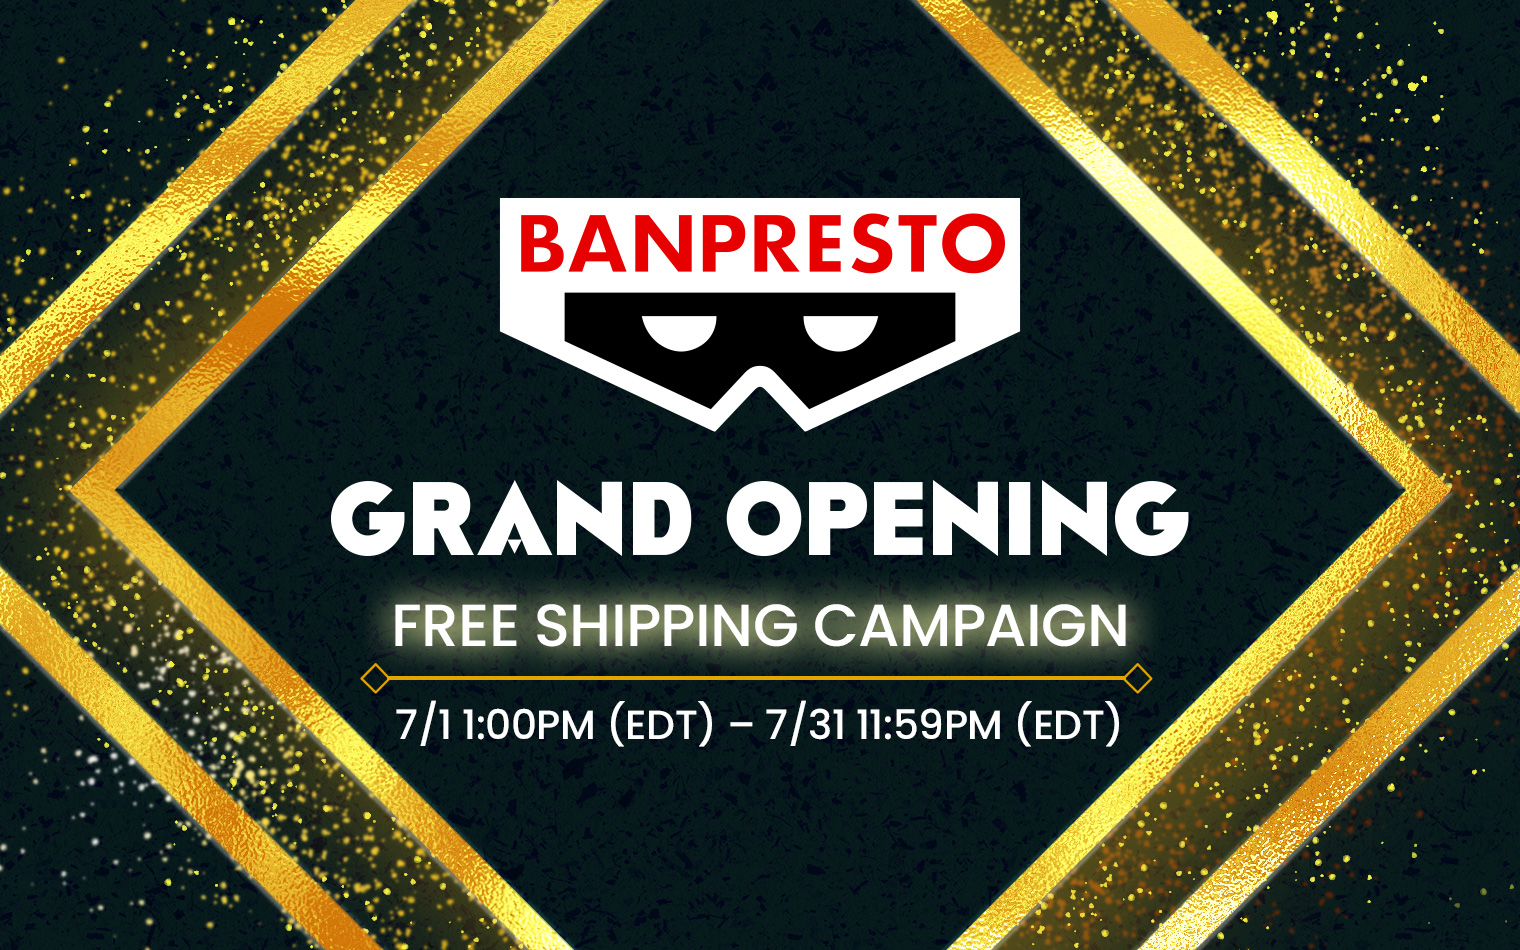 BANPRESTO GRAND OPENING